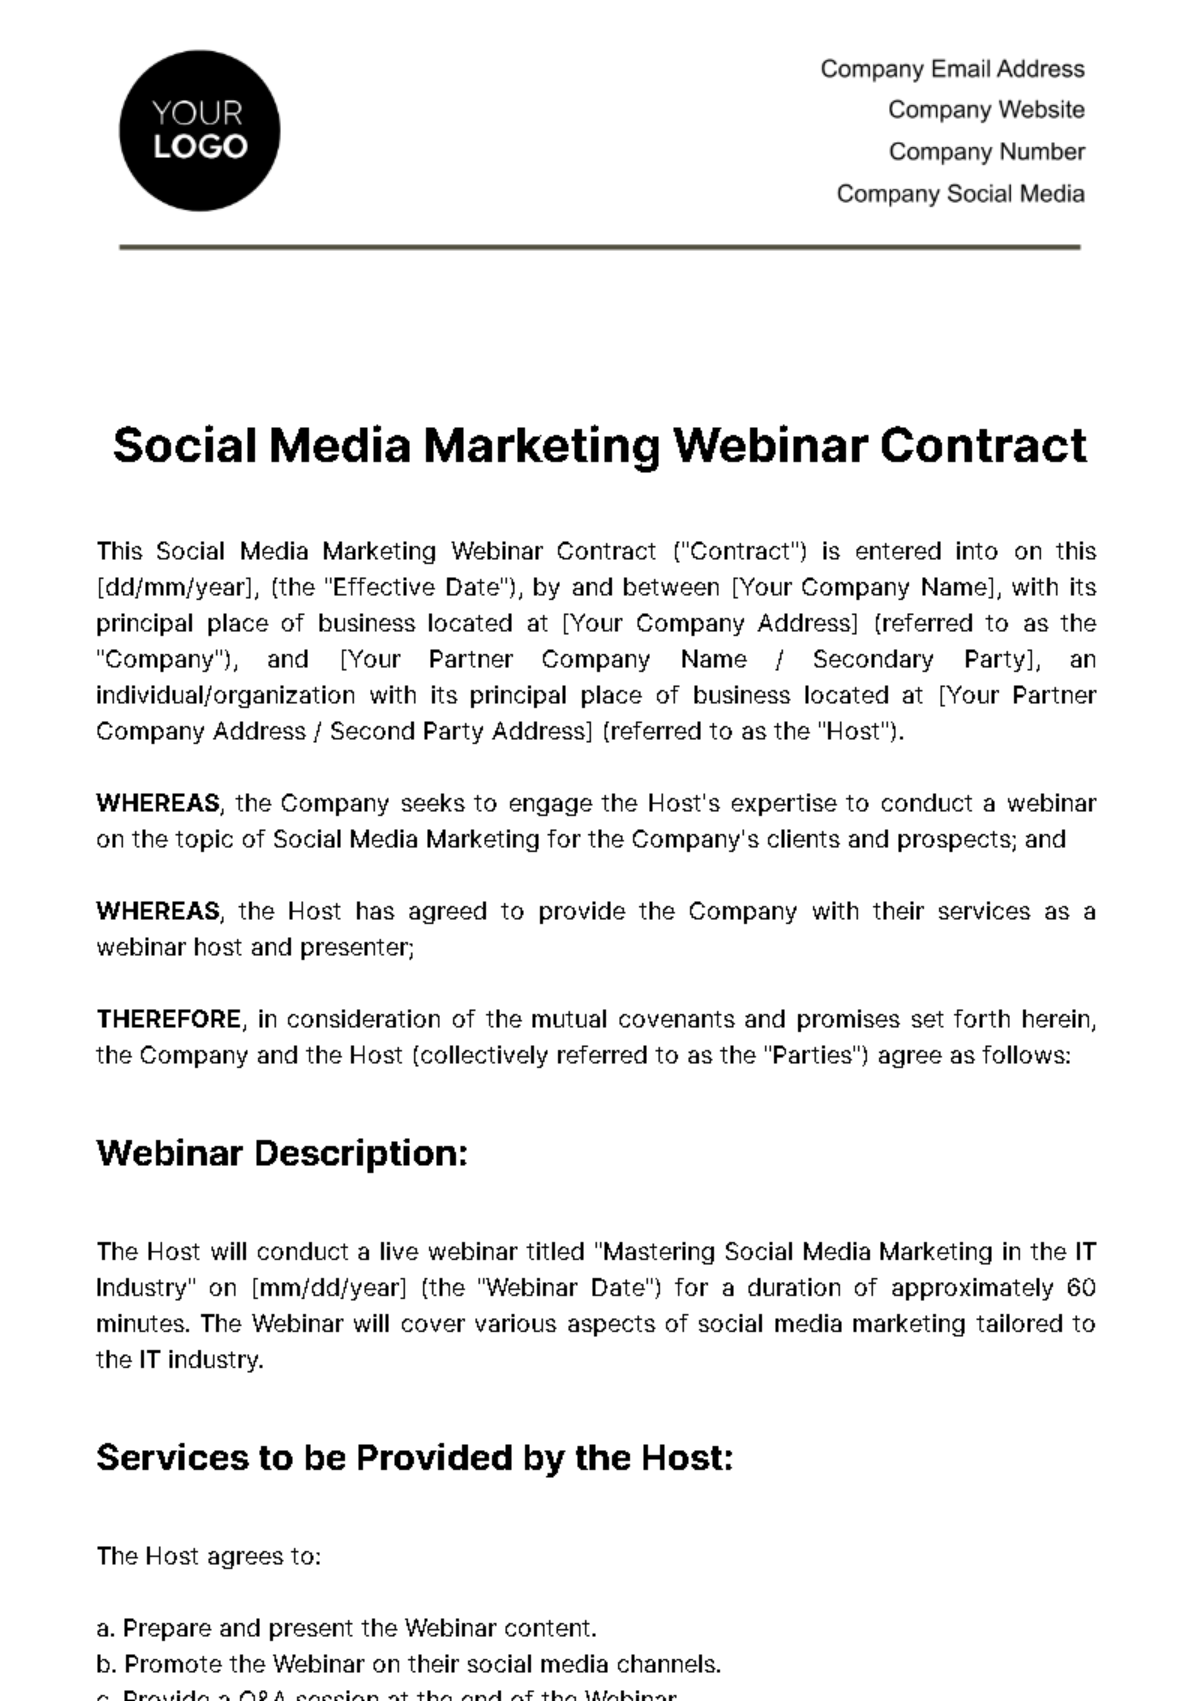 Social Media Marketing Webinar Contract Template